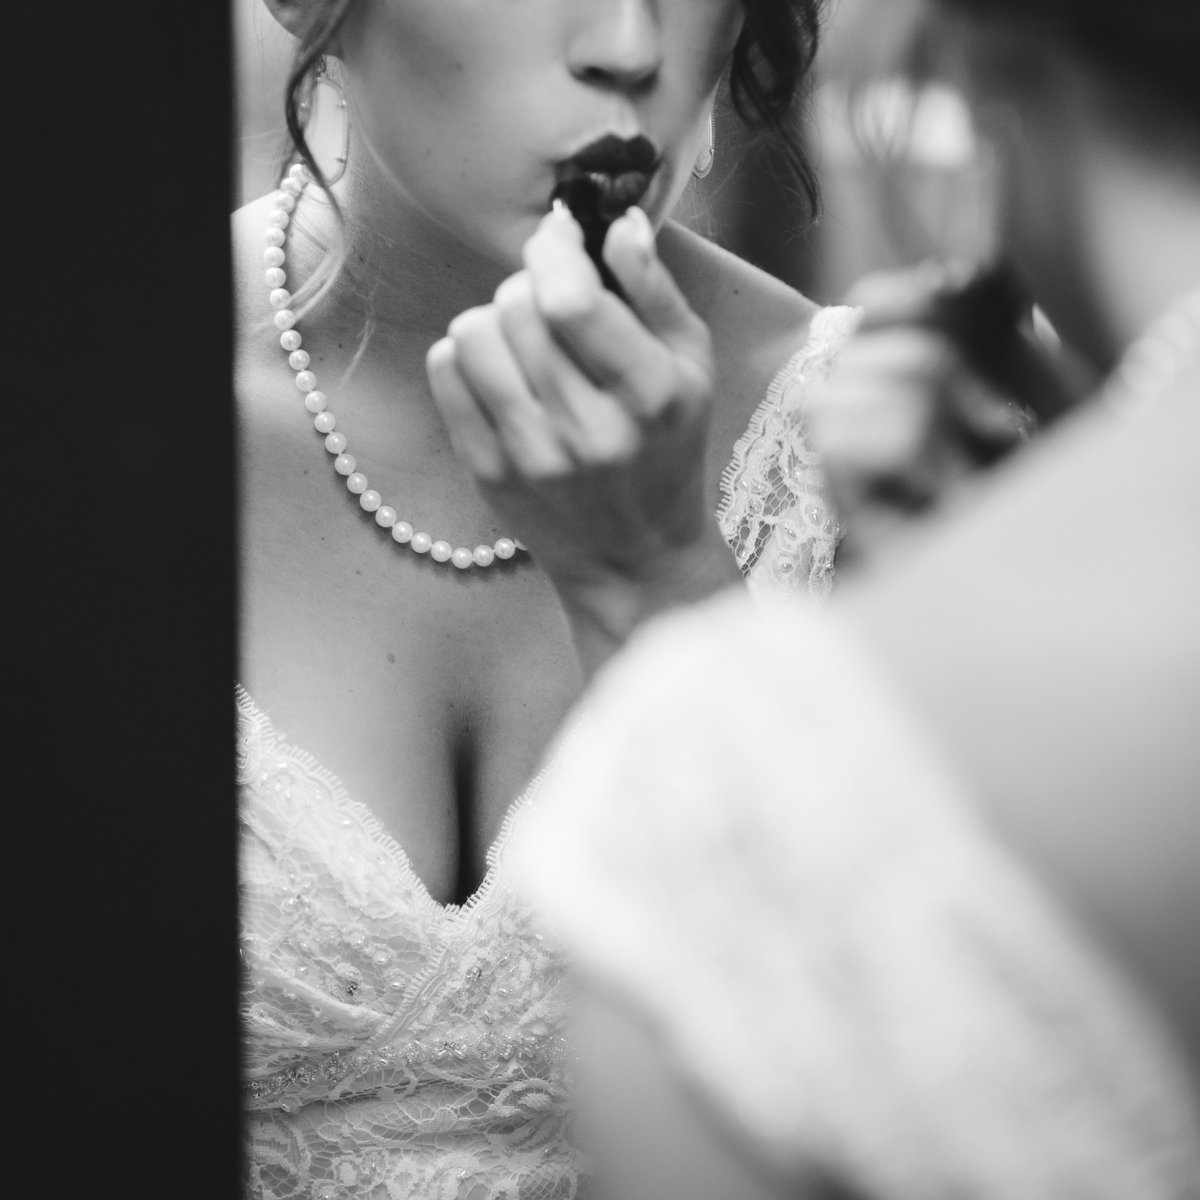 chateau bellevue wedding photographer bride lipstick 708 San Antonio St, Austin, TX 78701